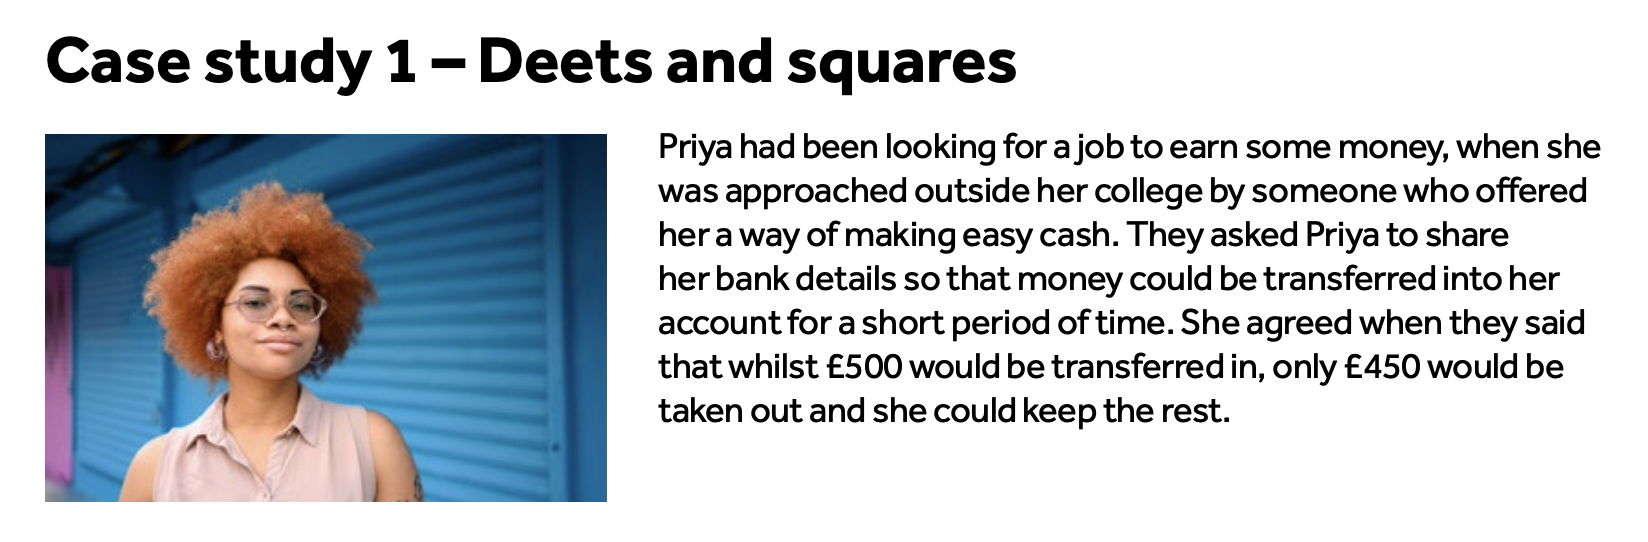 Priya - deets and squares